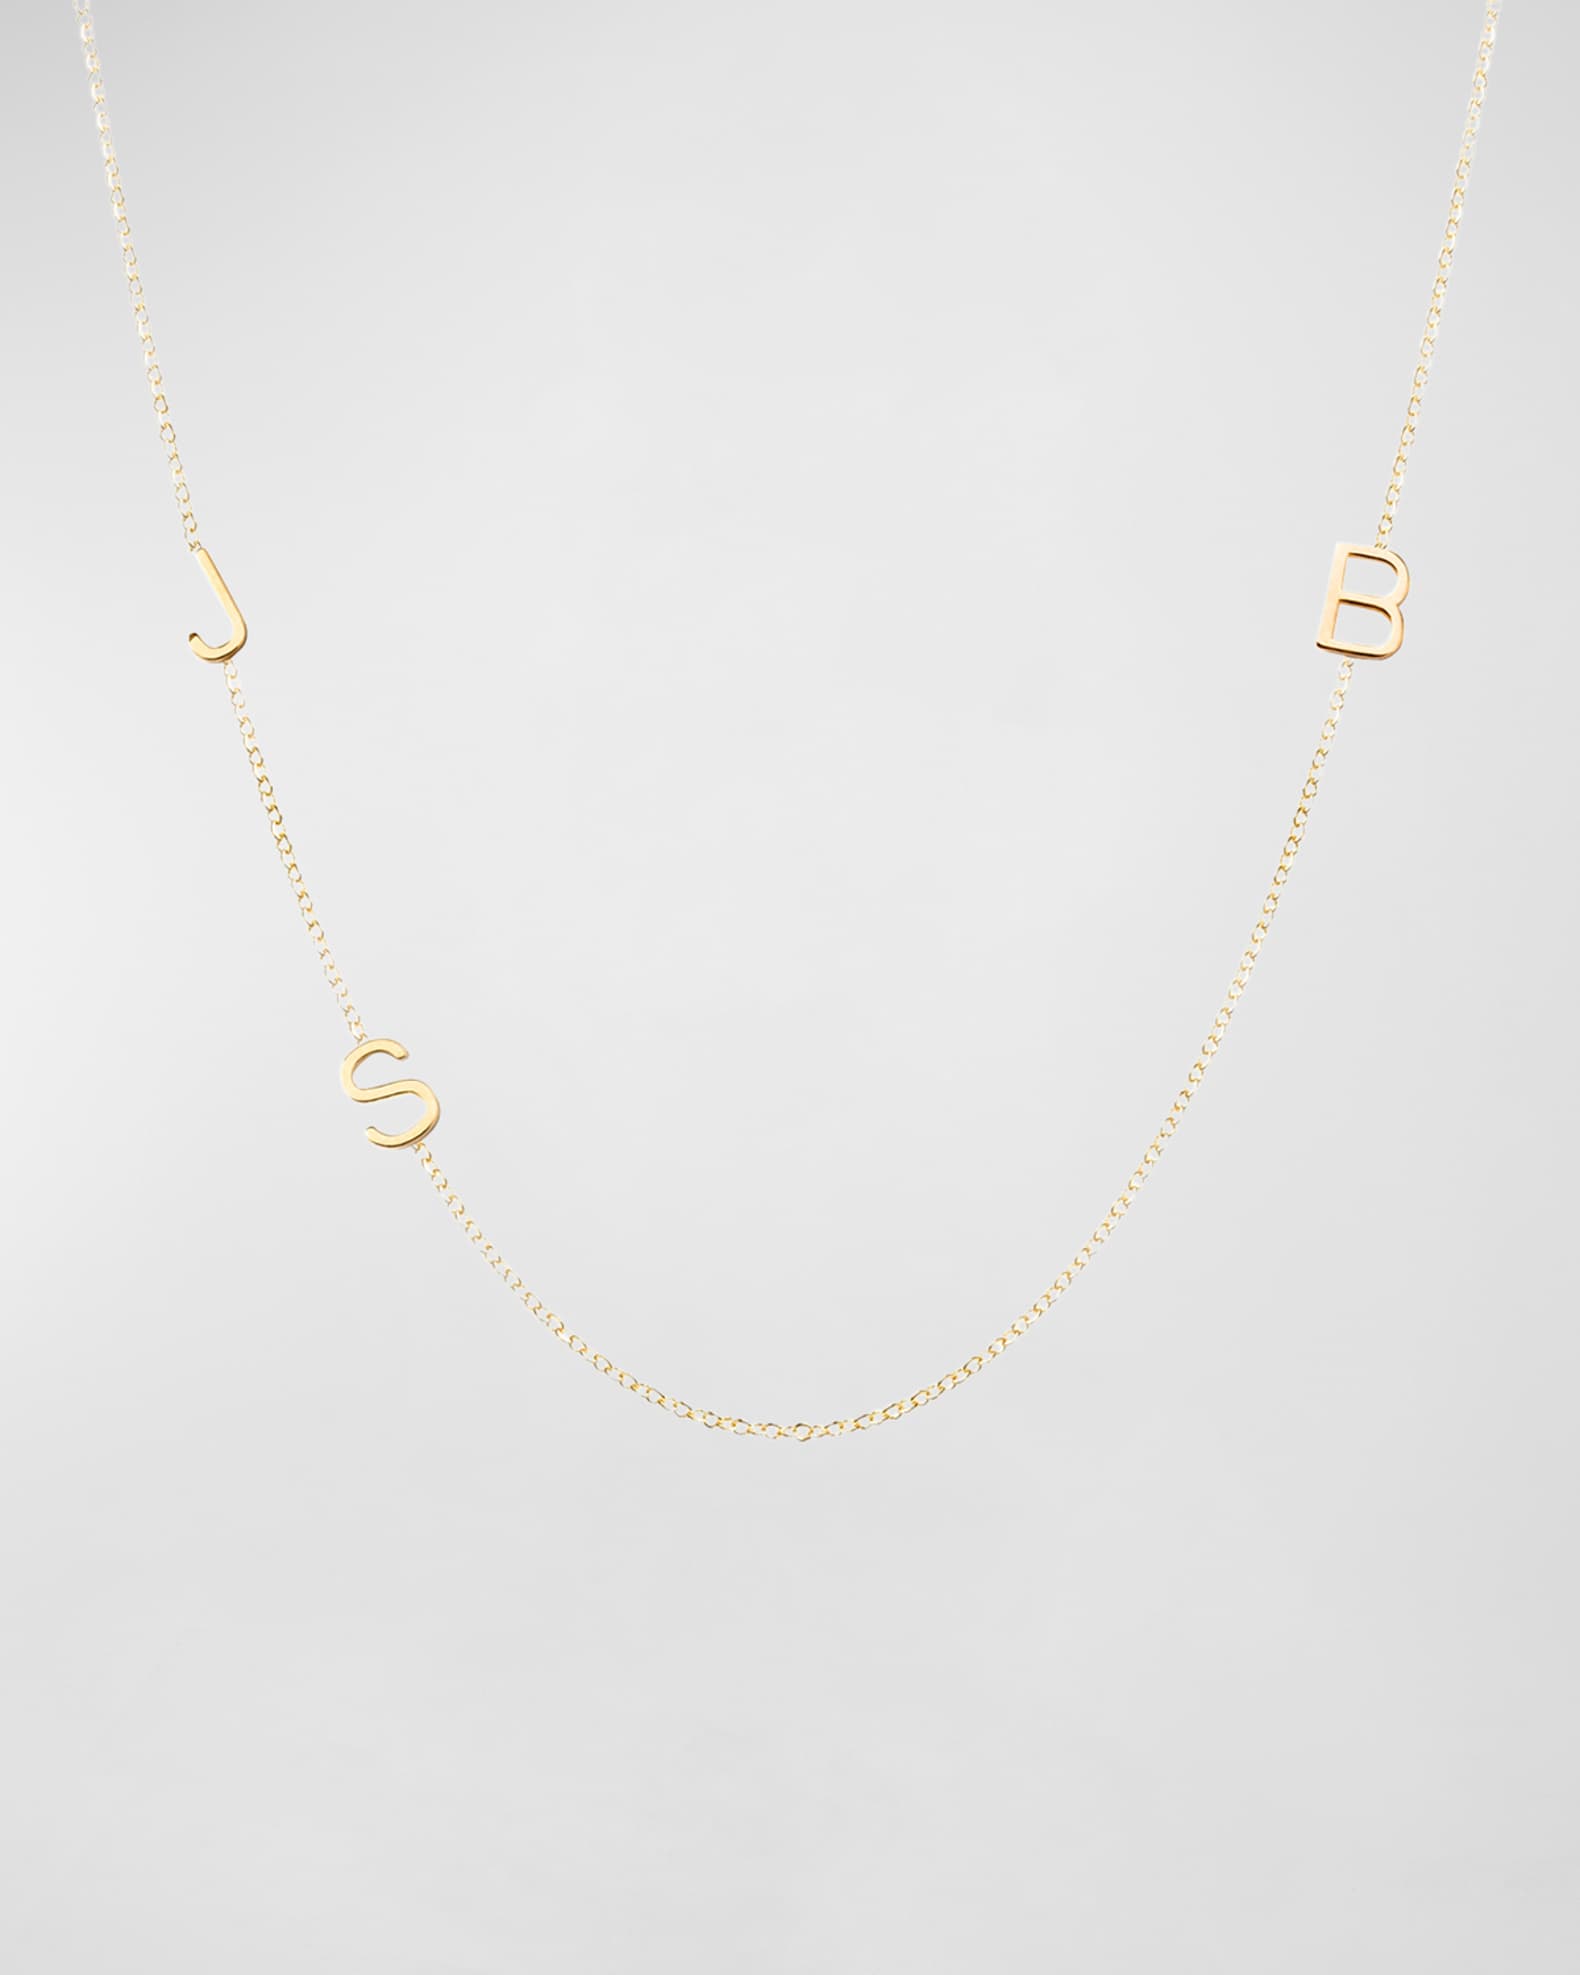 3-Letter Monogram Necklace